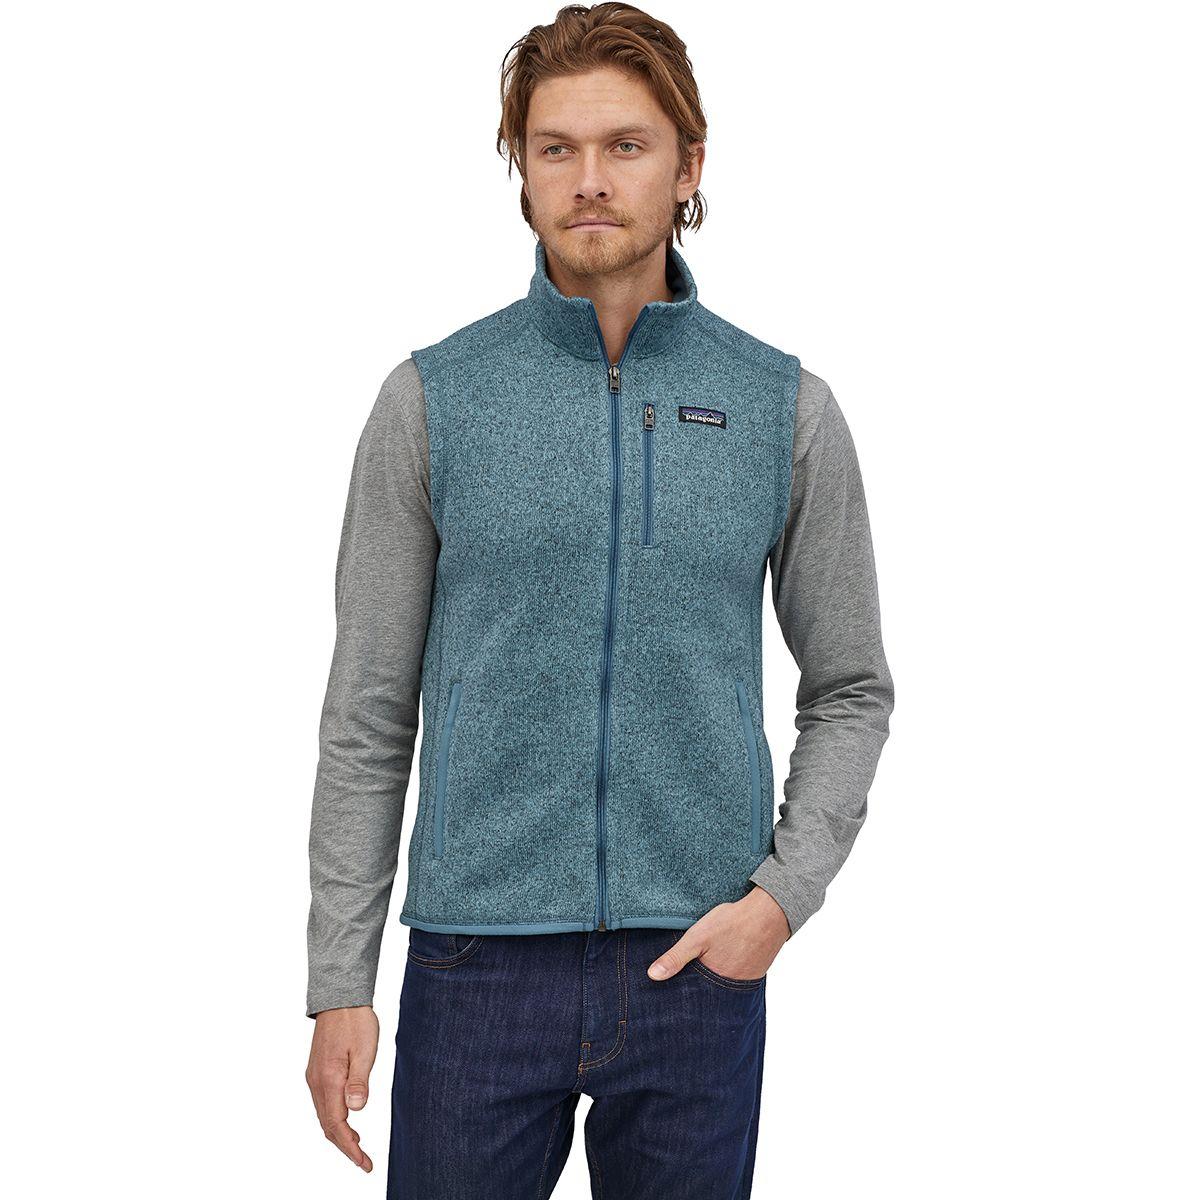 Patagonia Better Sweater Fleece Vest in Blue for Men - Lyst